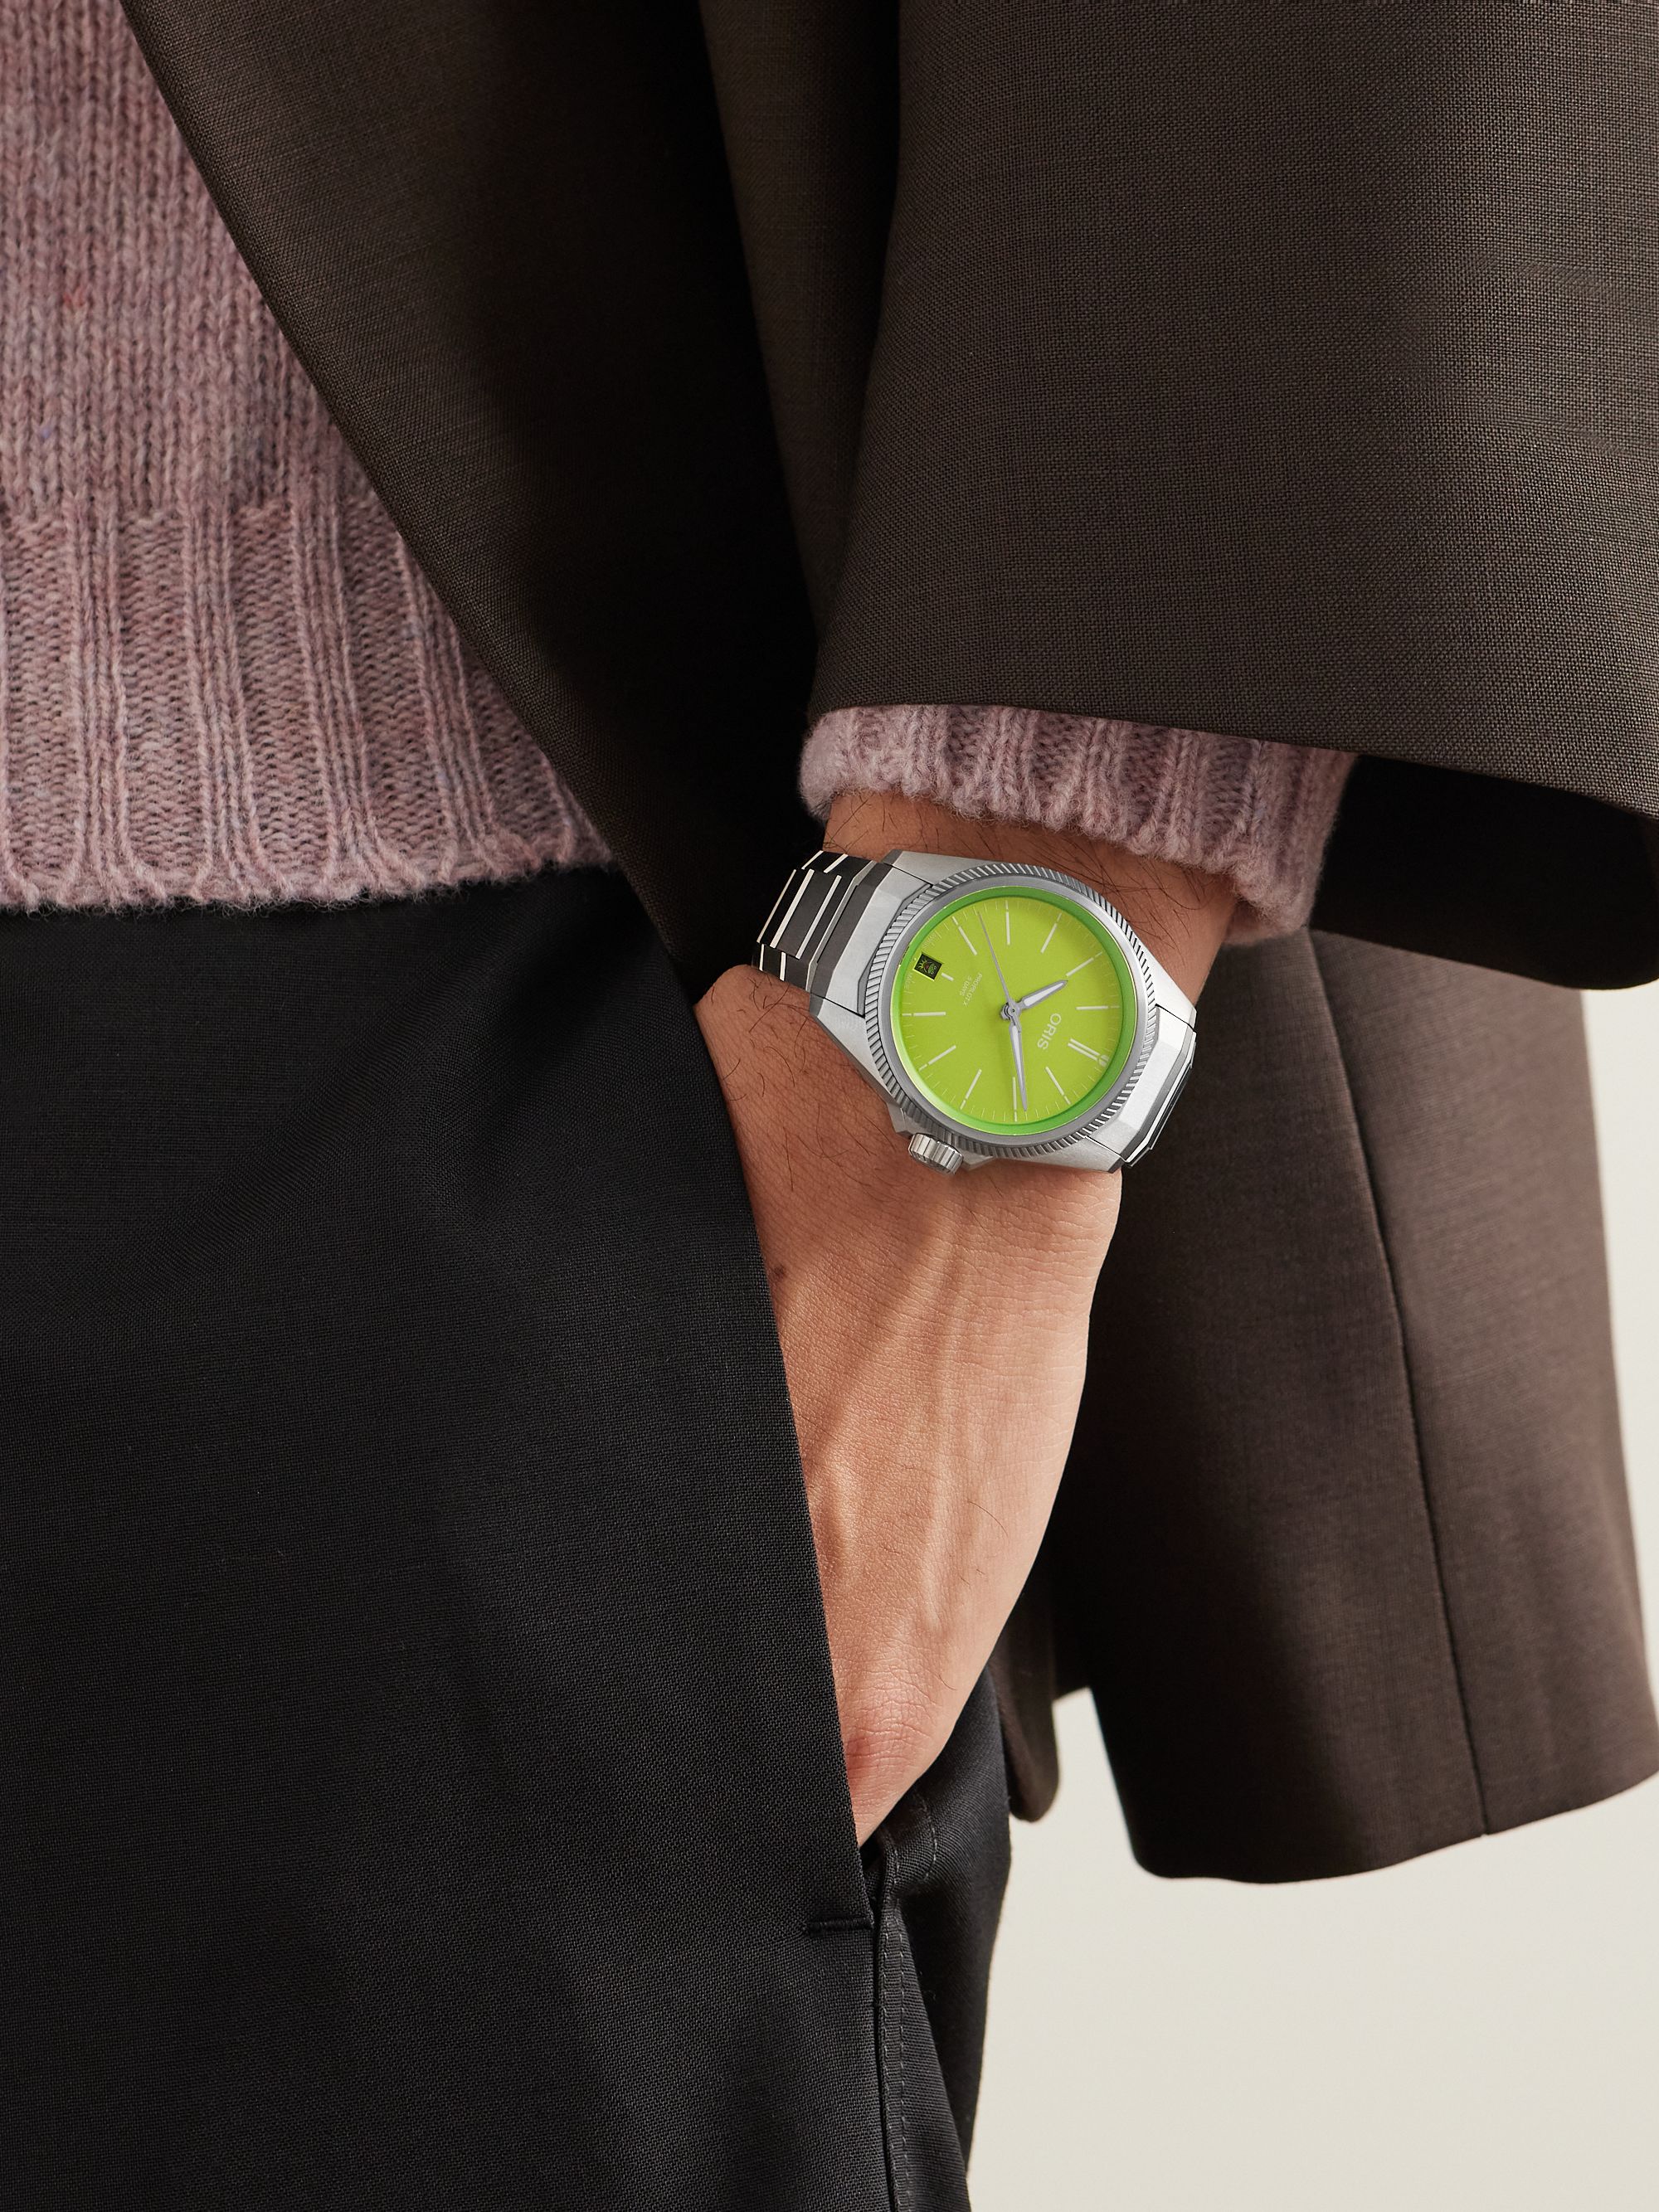 ORIS ProPilot X Kermit Limited Edition 39mm Titanium Watch, Ref. No. 01 400 7778 7157-07 7 20 01TLCGreen